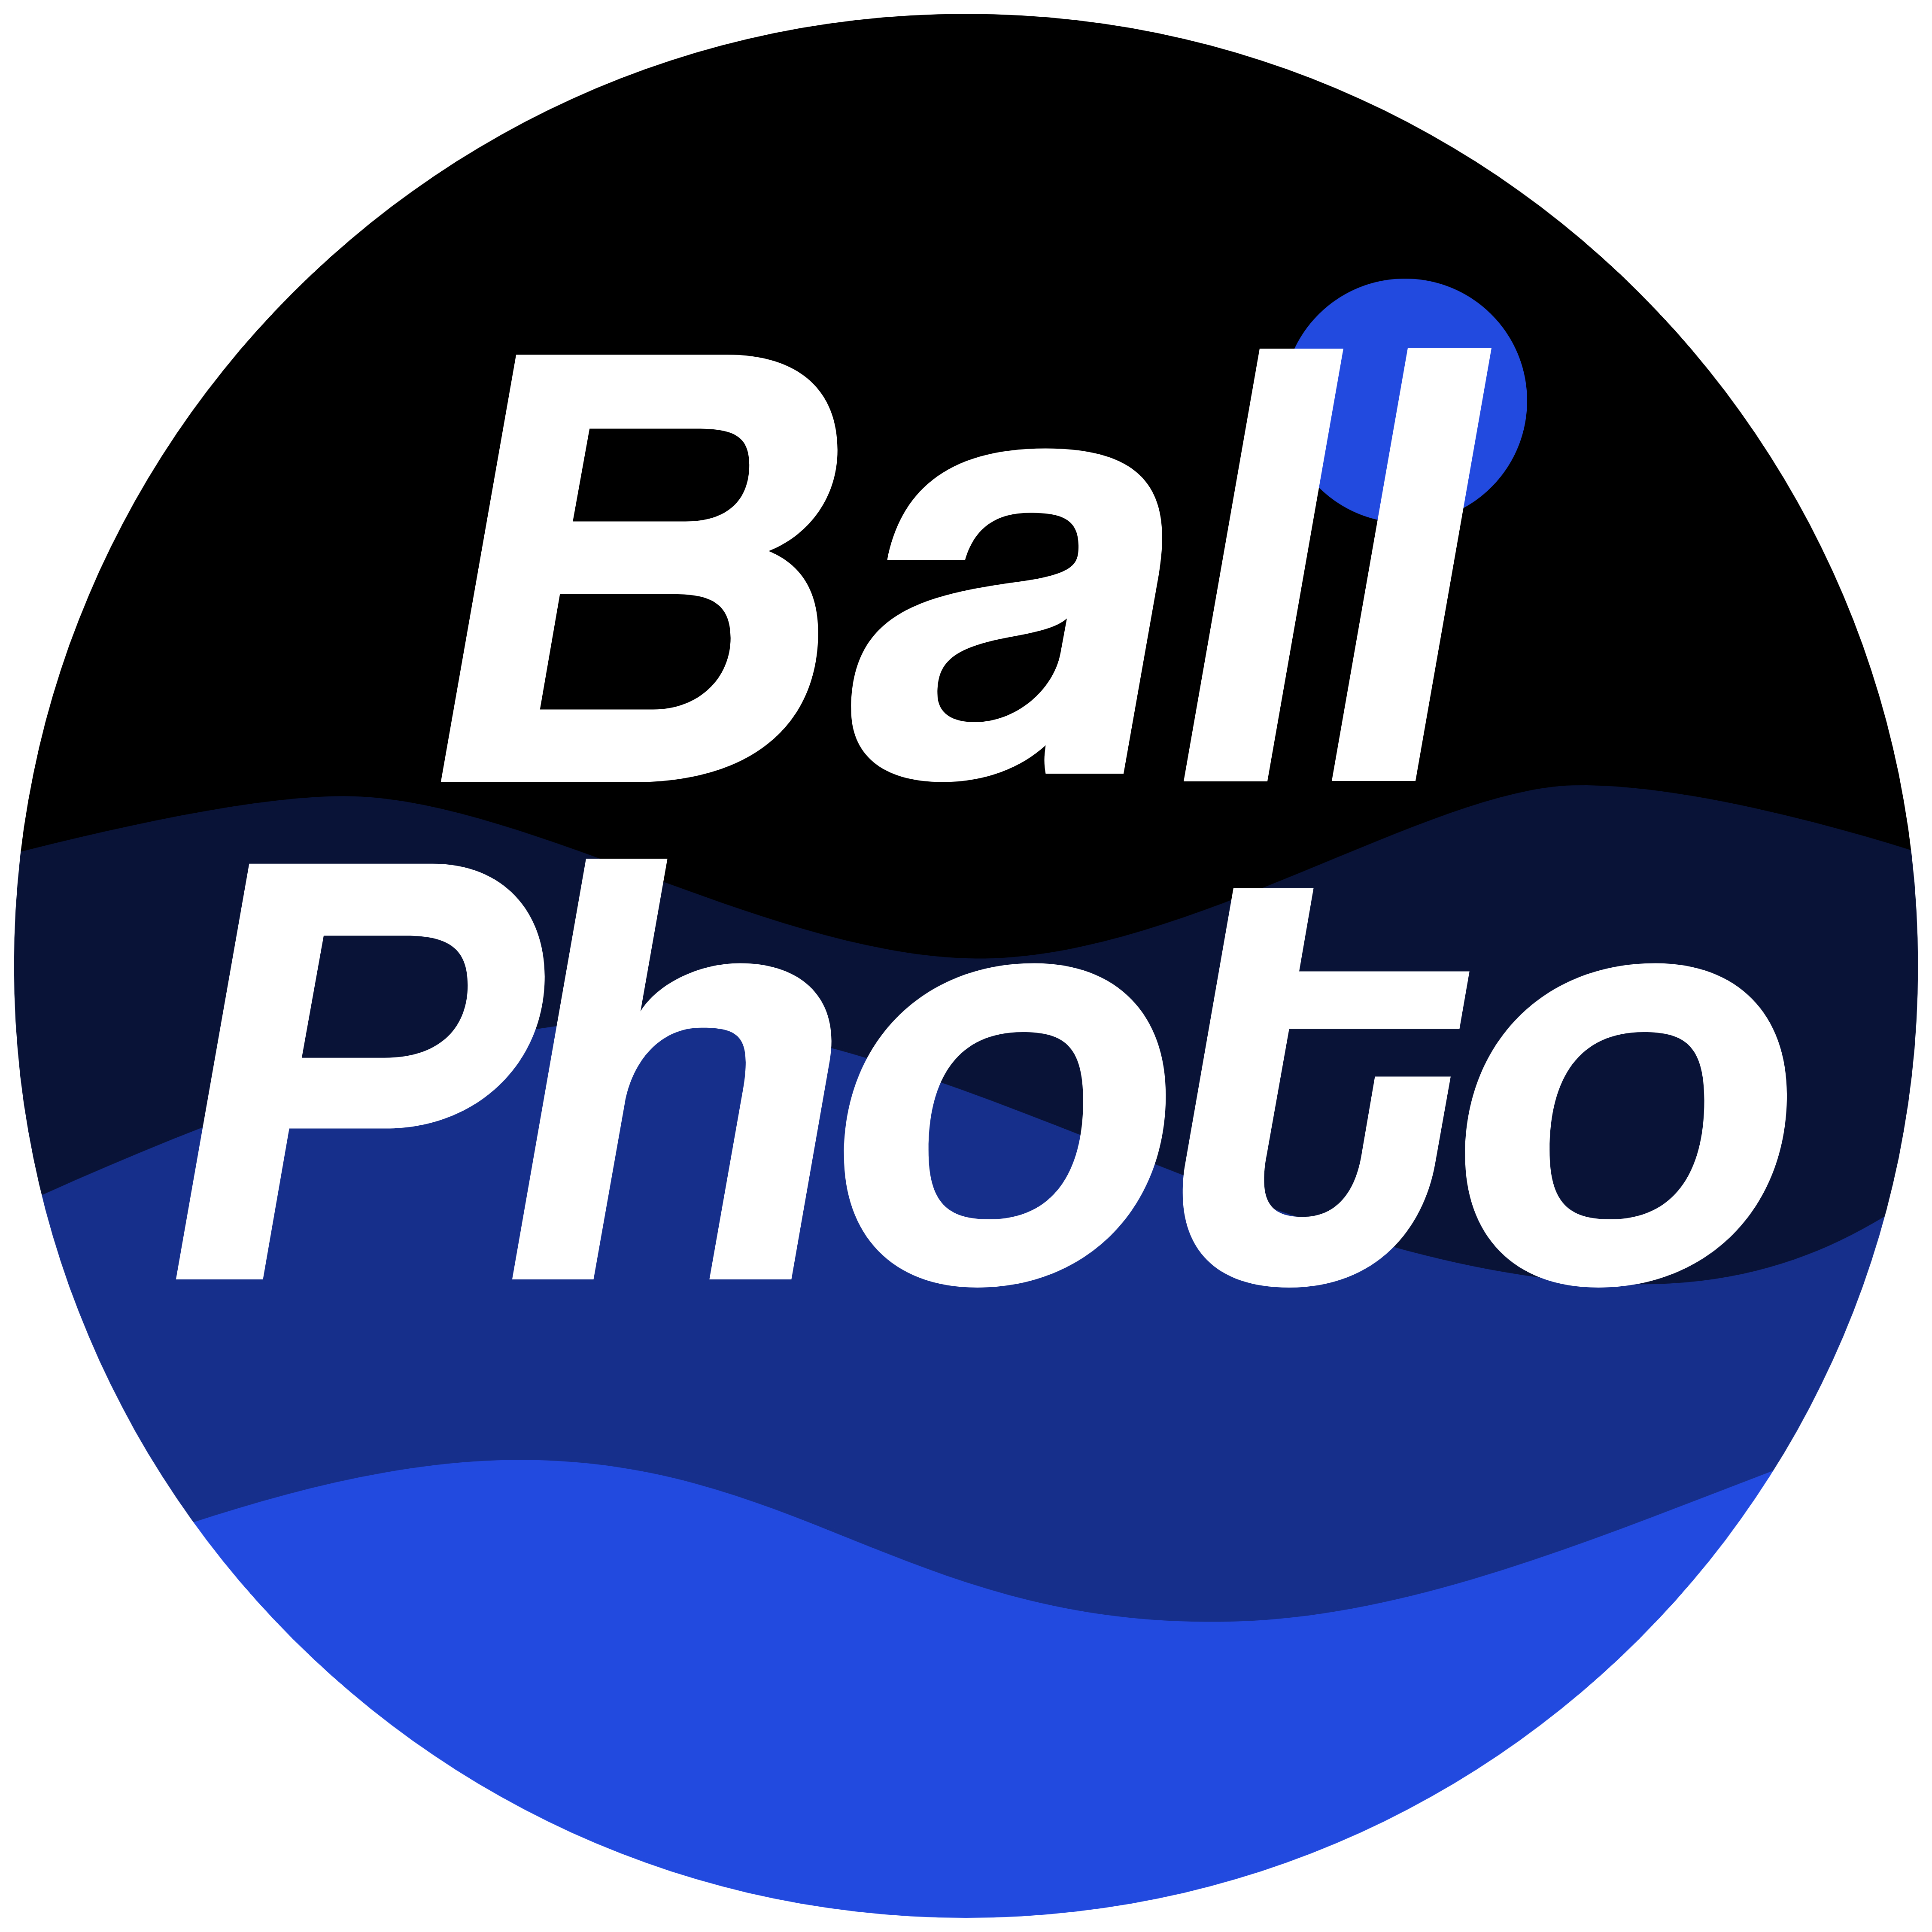 Ball Photo